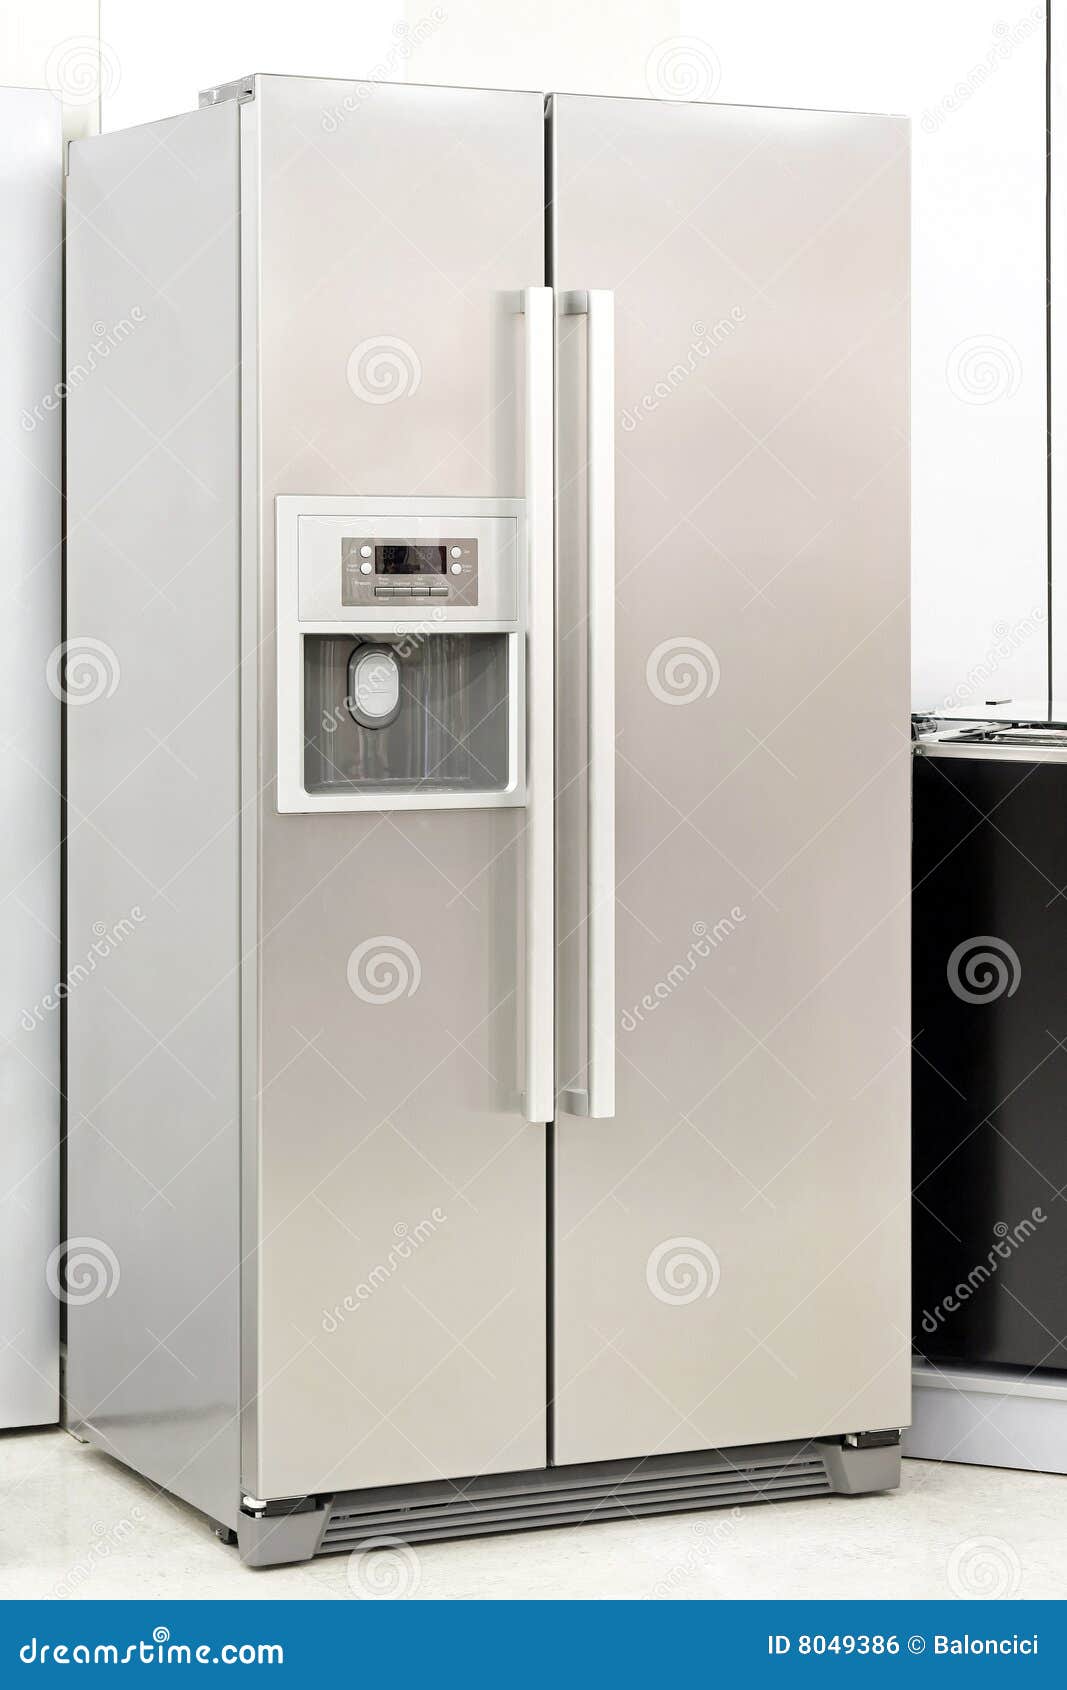 silver fridge